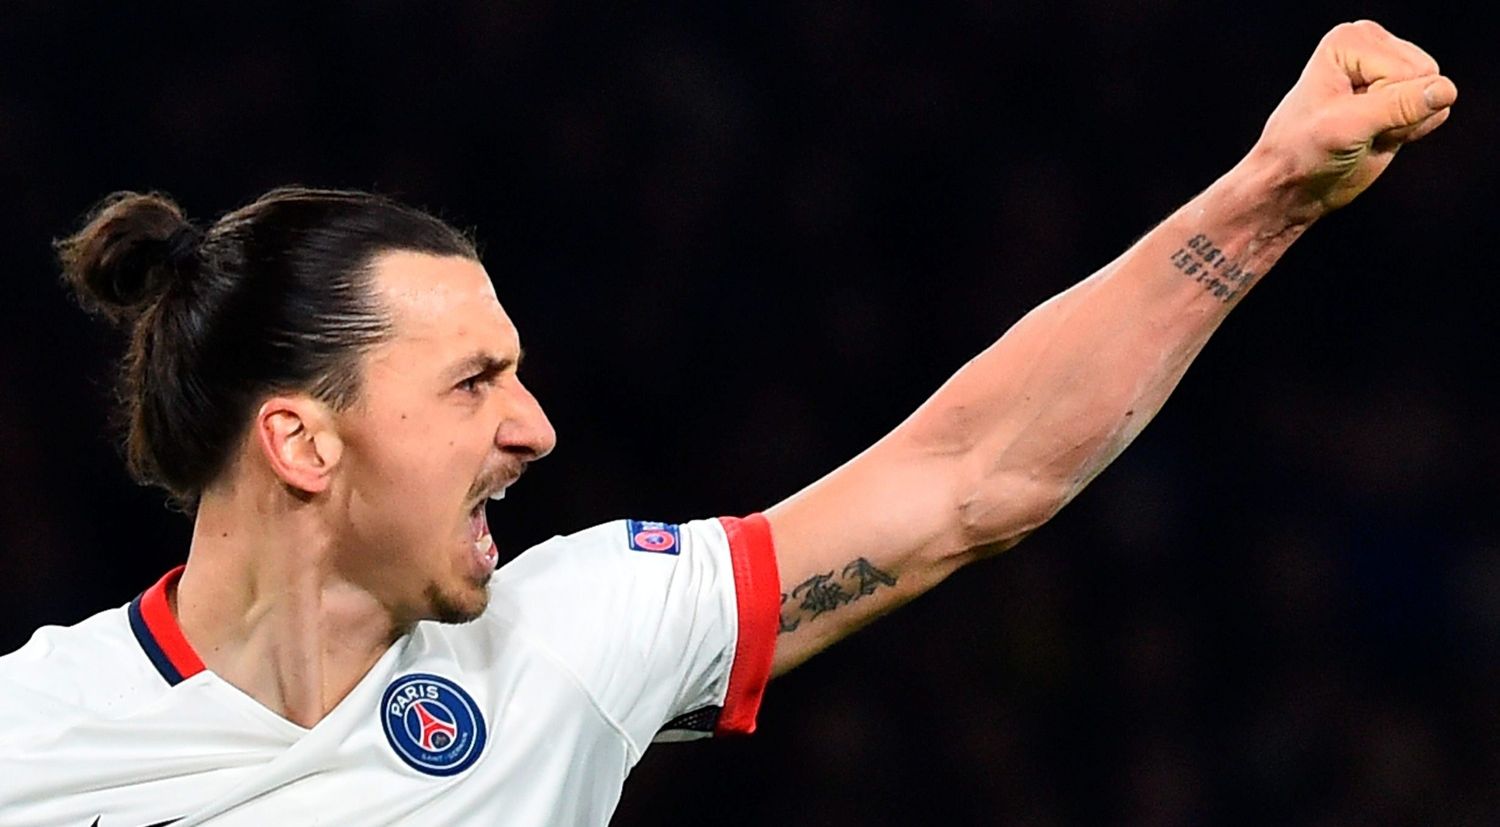 Zlatan Ibrahimovic: Angry PSG manager Laurent Blanc hopes striker